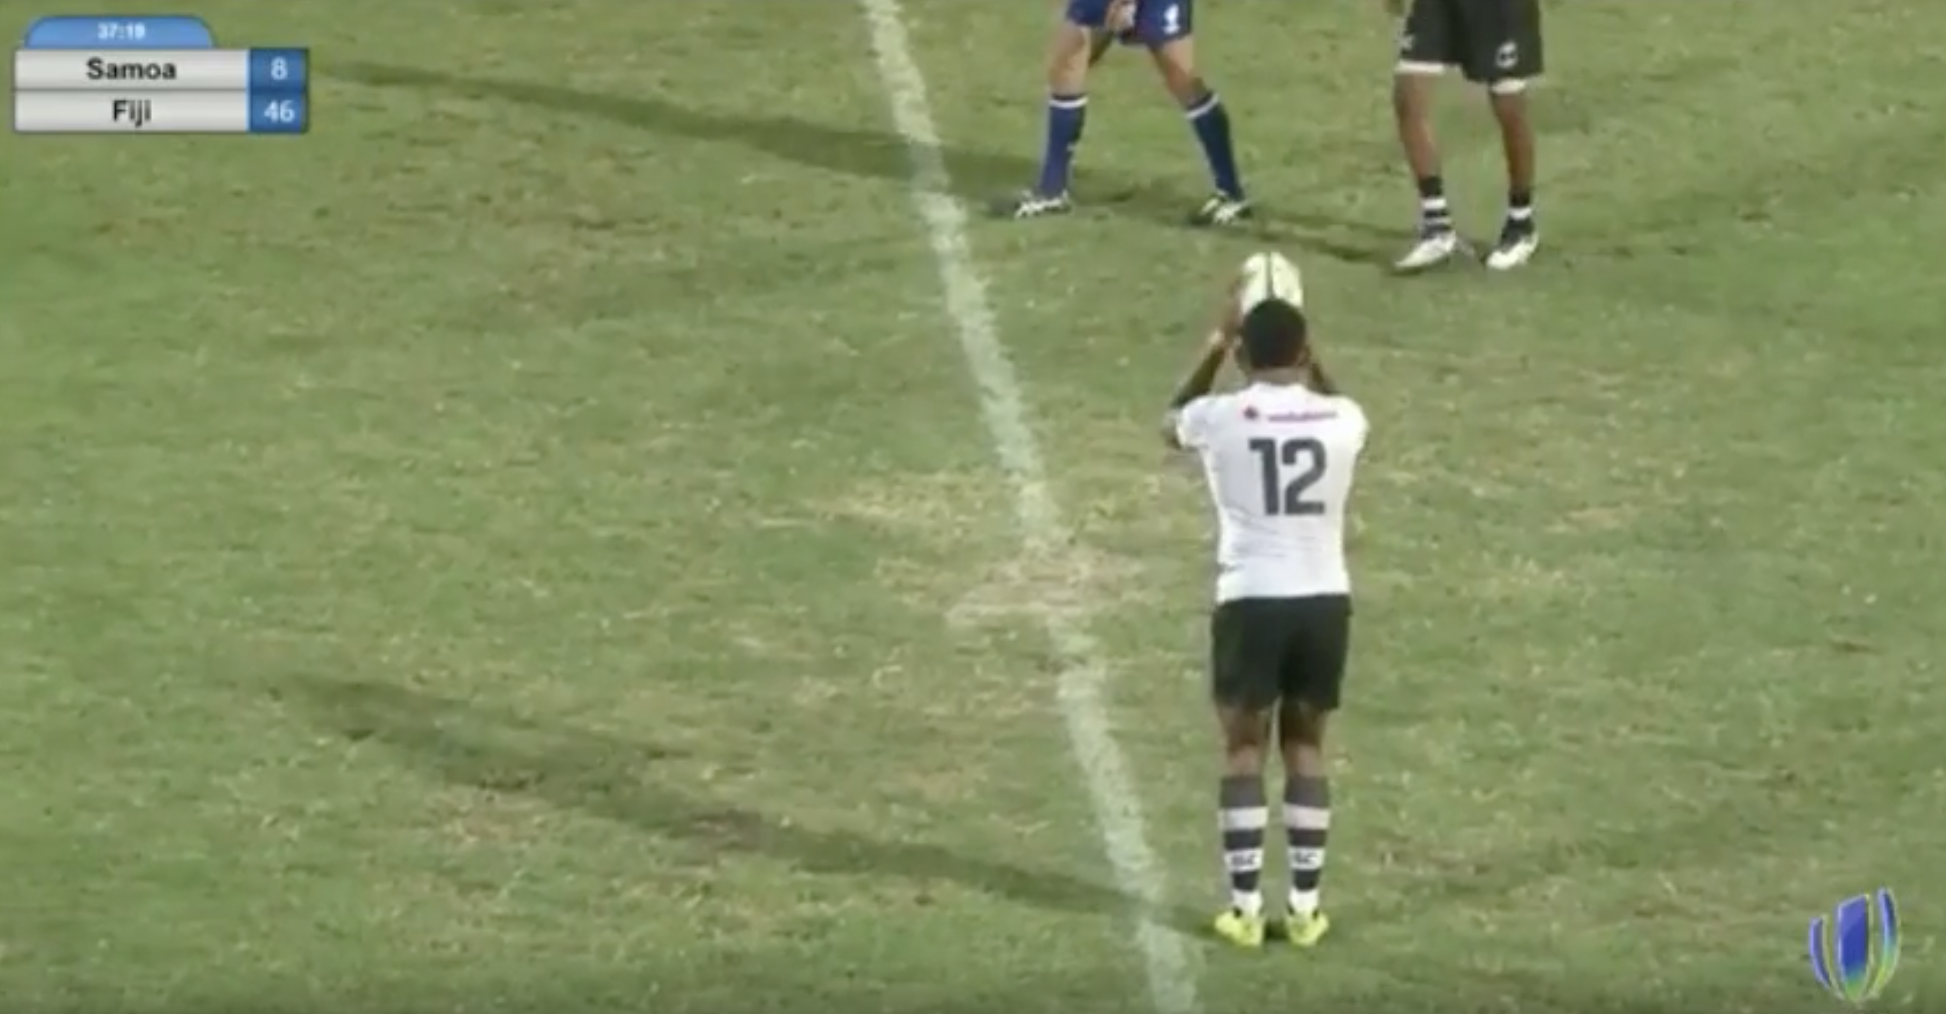 VIDEO: Fijian Under 20’s player reveals swan-like reflexes to score directly off the restart